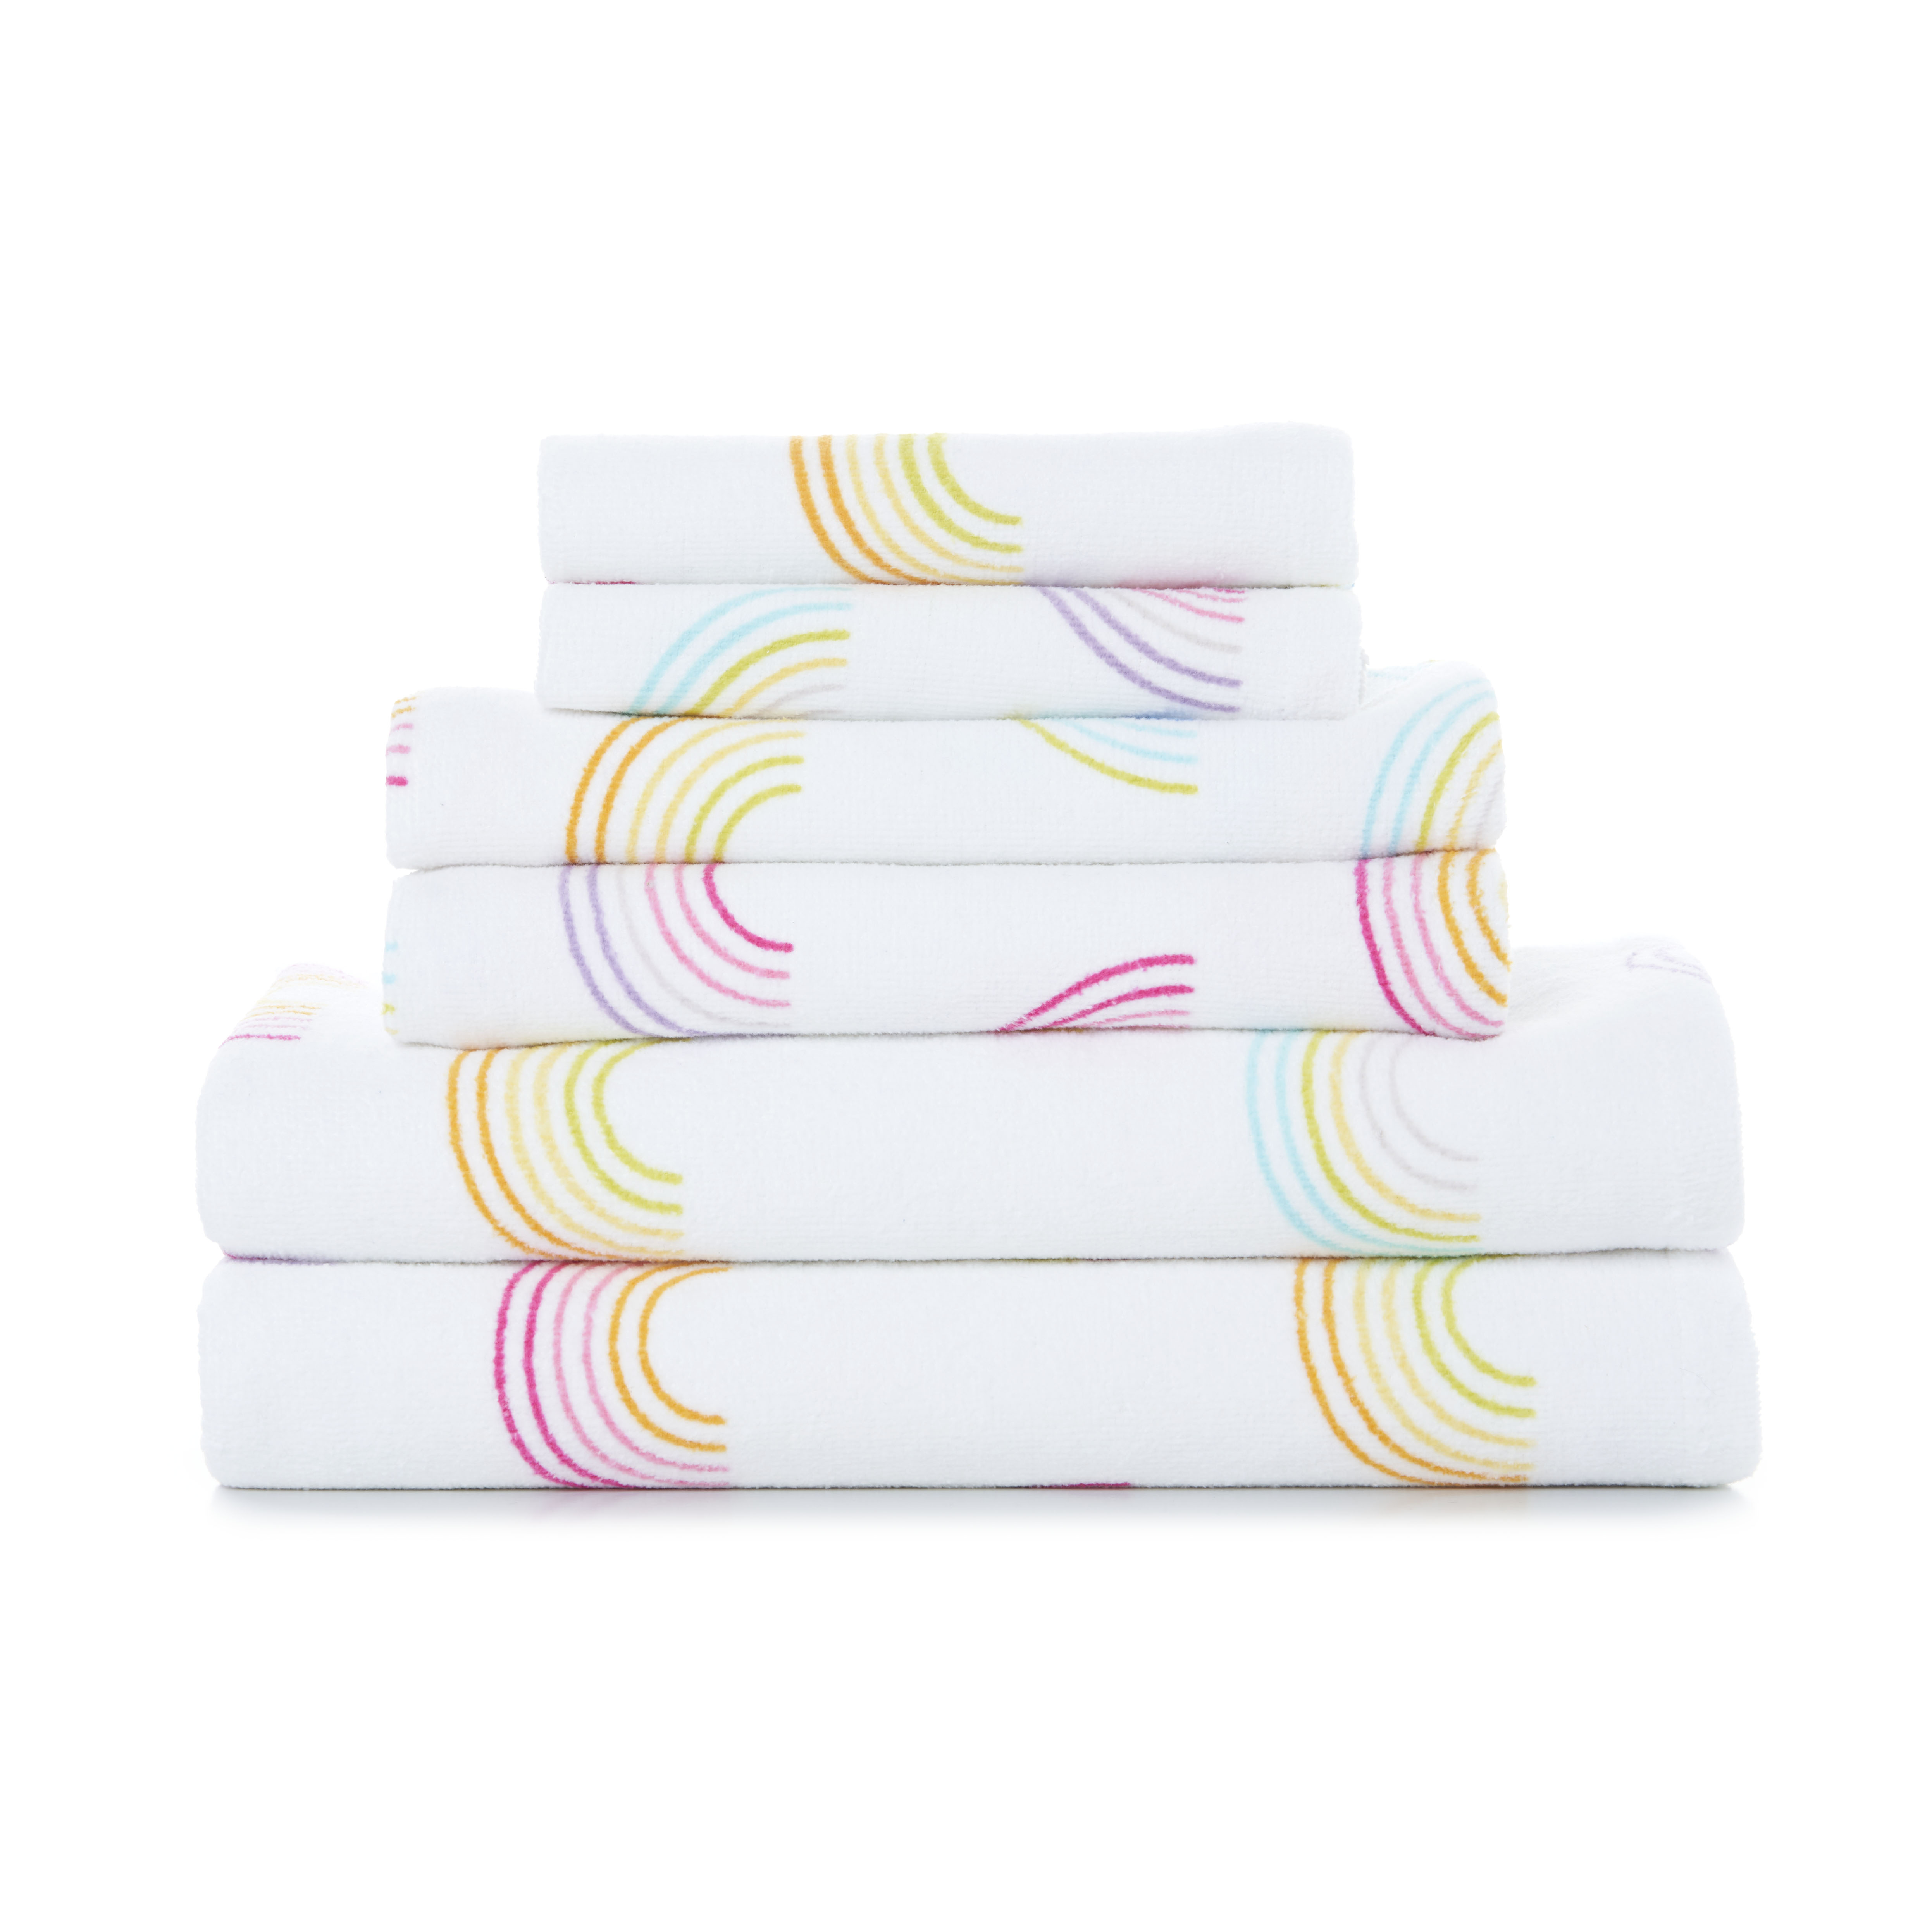 Gap Home Kids Rainbow Toss Organic Cotton 6 Piece Towel Set, White - image 4 of 5